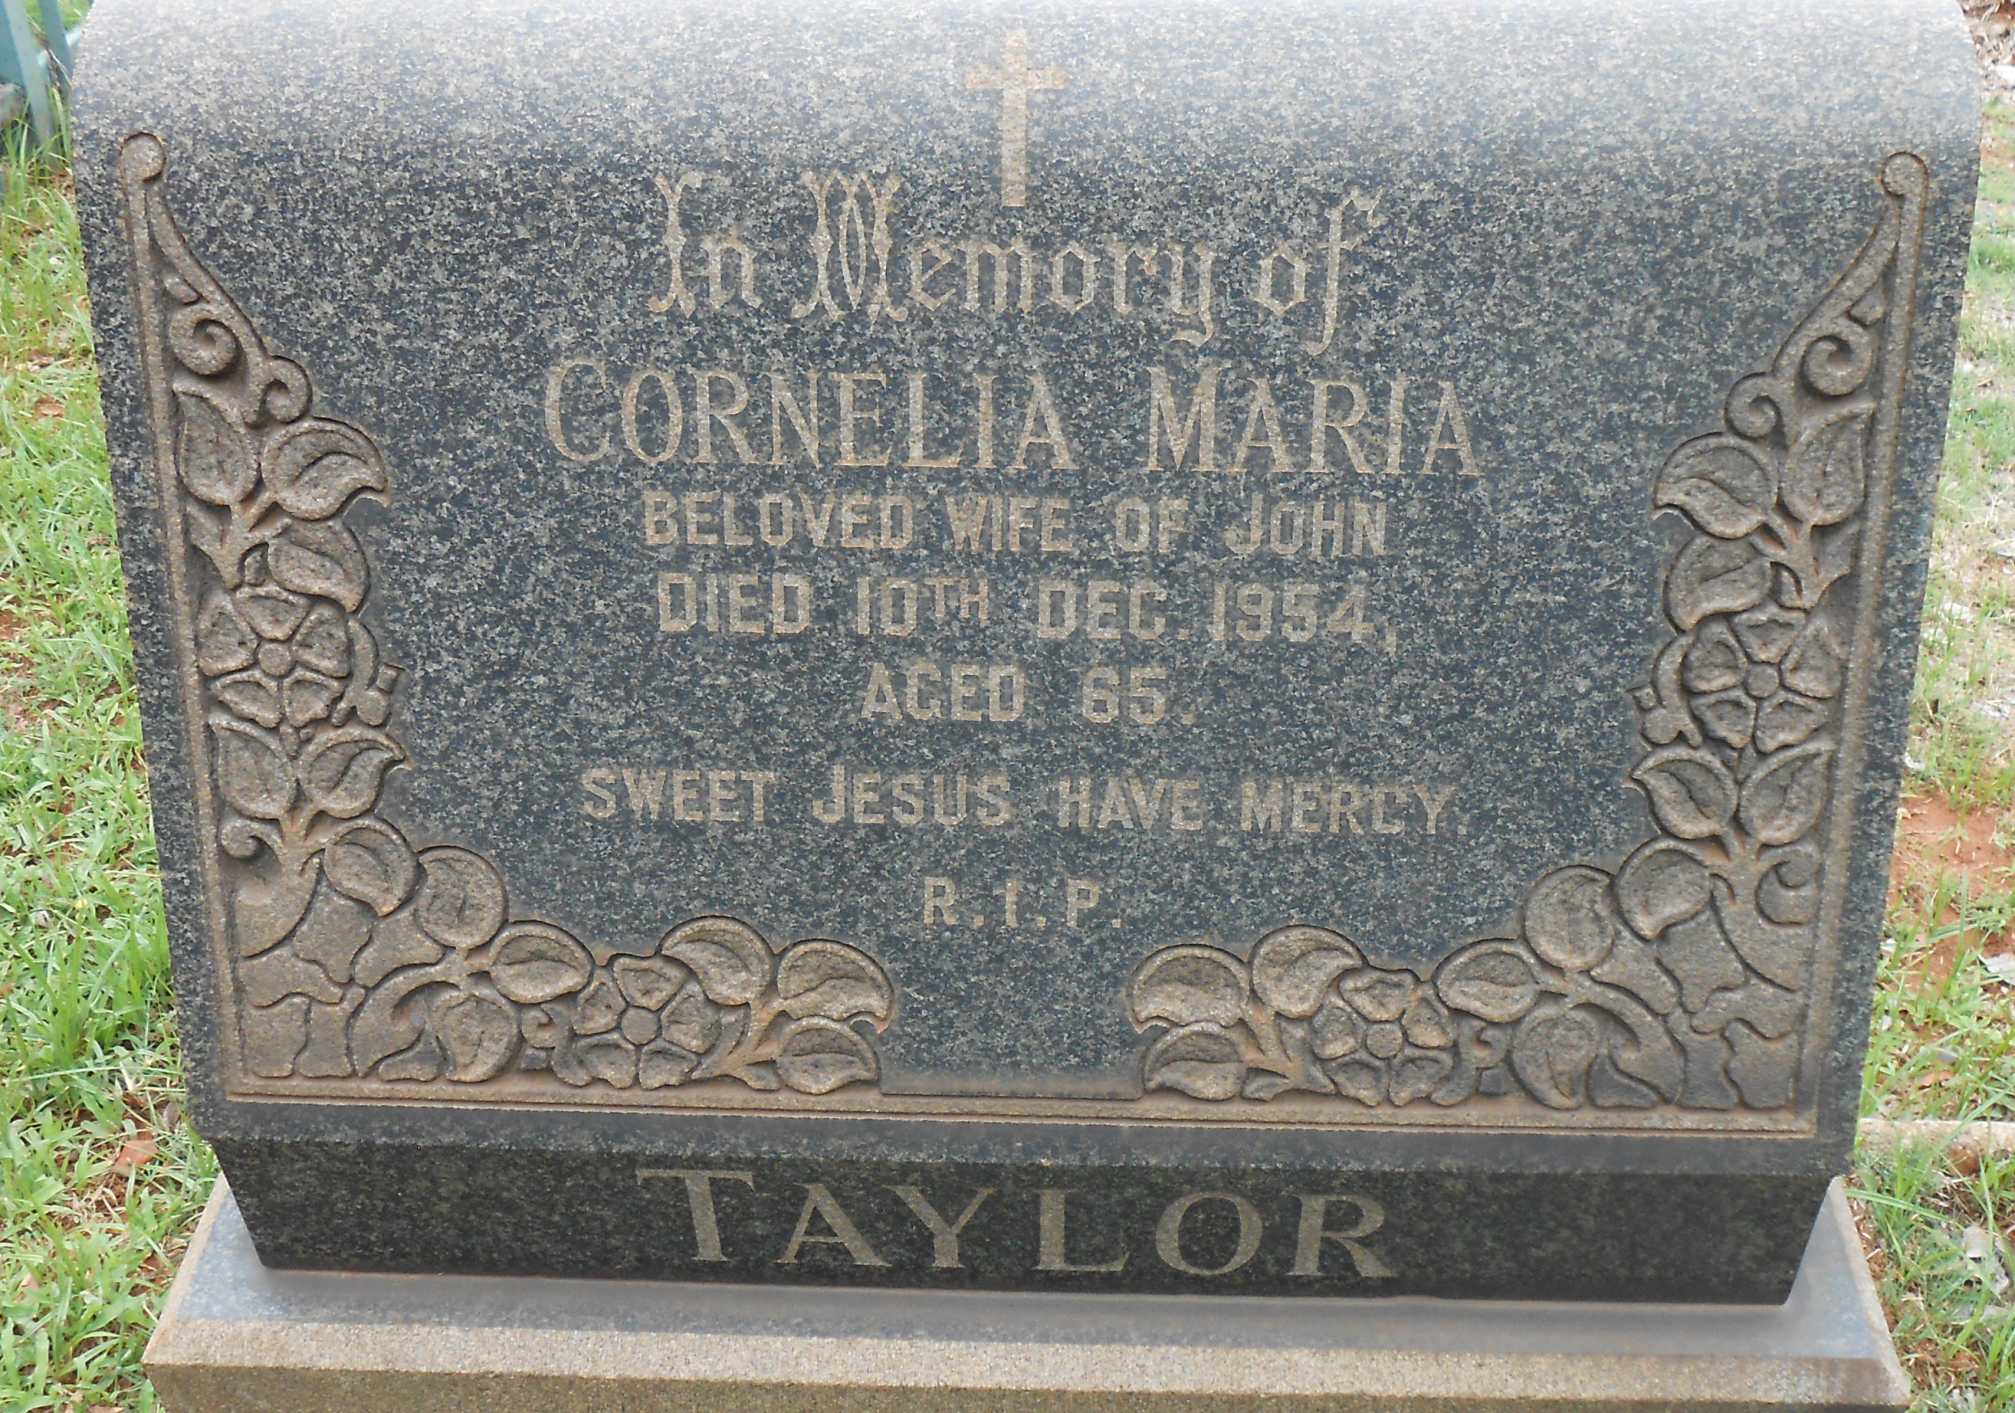 TAYLOR Cornelia Maria -1954